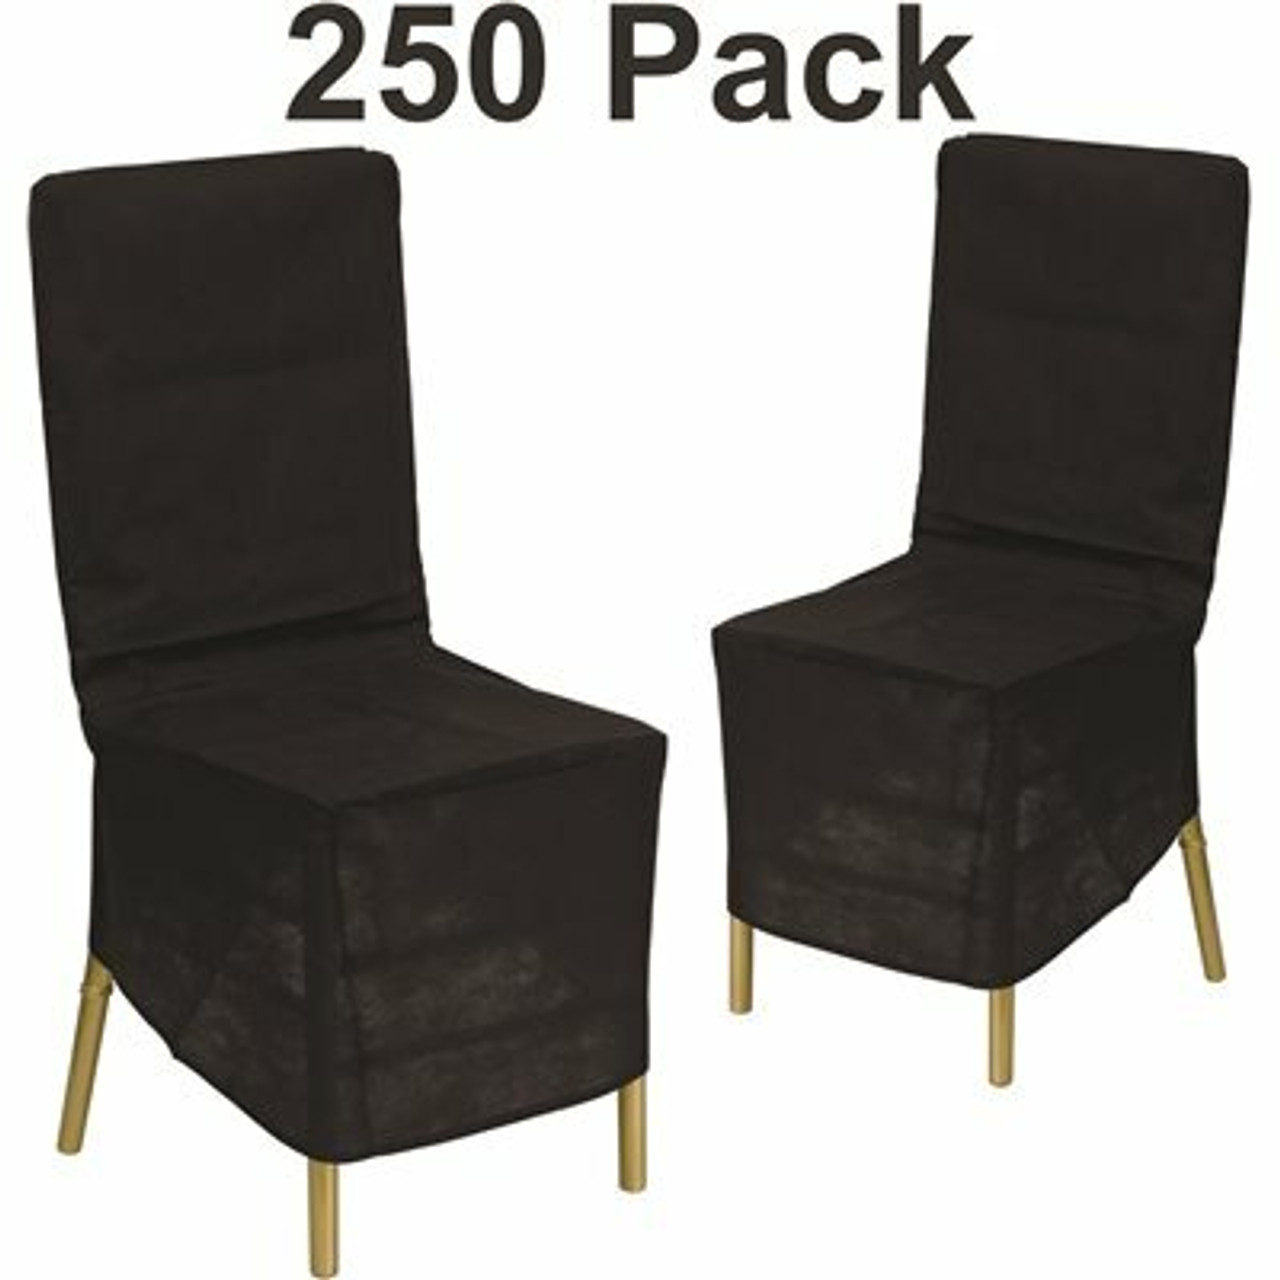 Carnegy Avenue Black Chiavari Chair Cover (Set Of 250)